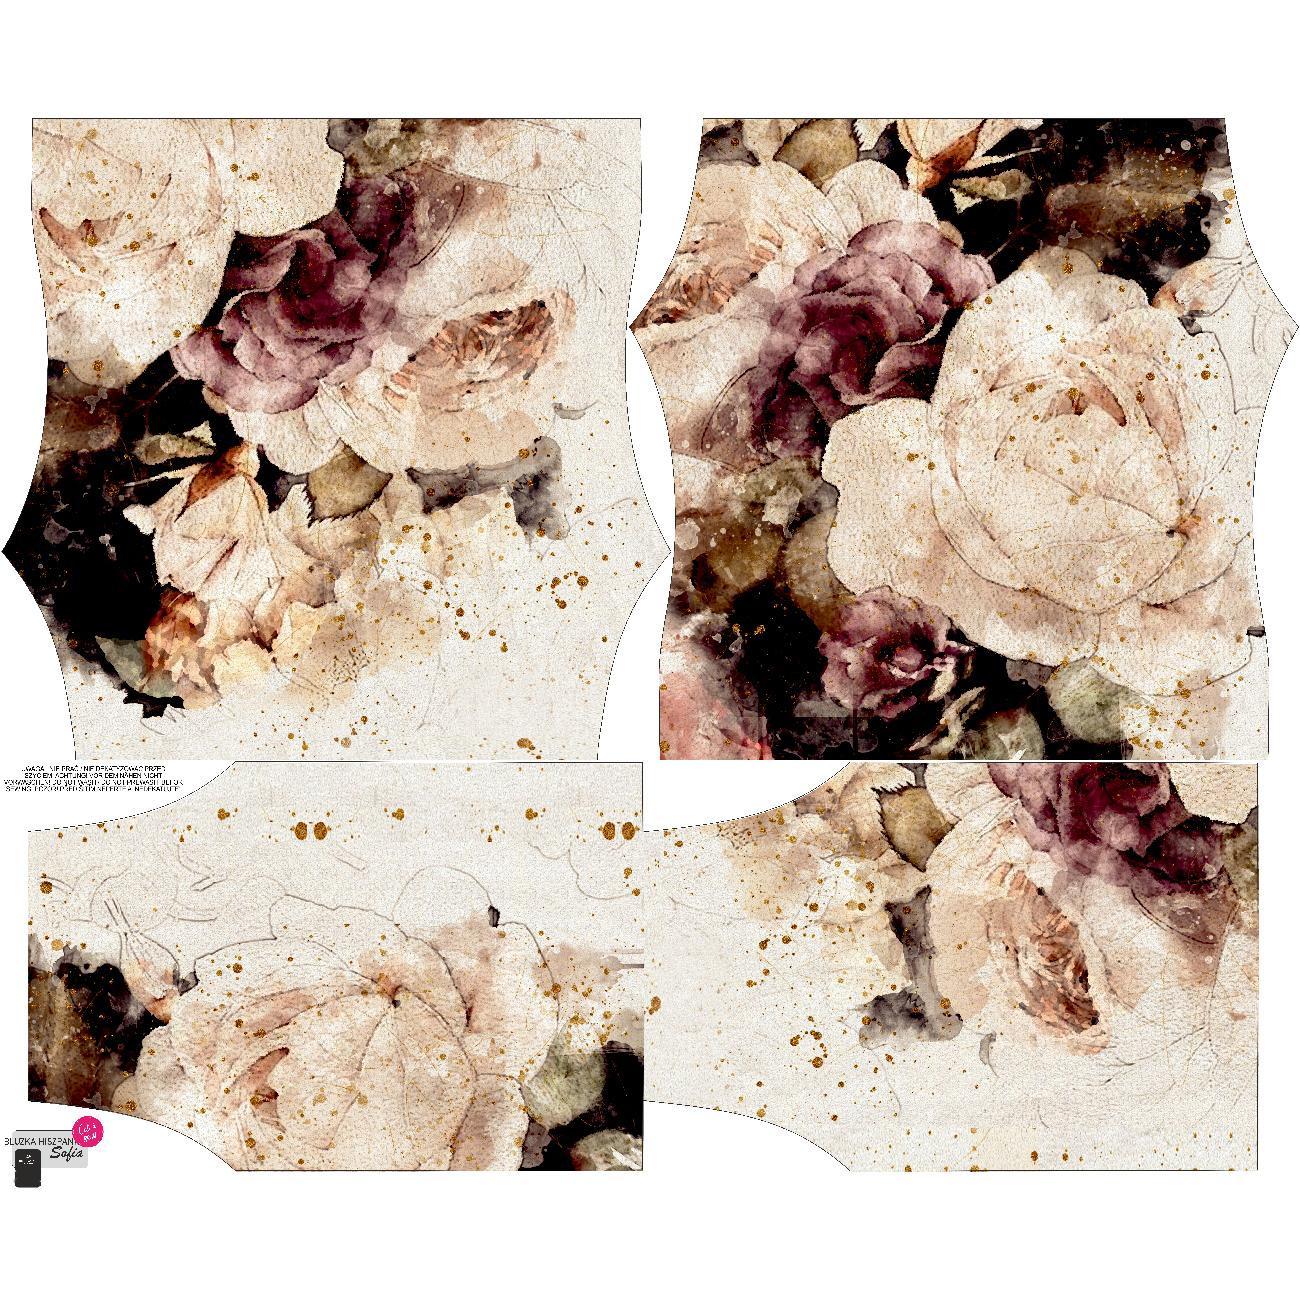 Carmenausschnitt Bluse (SOFIA) - WATERCOLOR FLOWERS MS. 4 - Nähset 